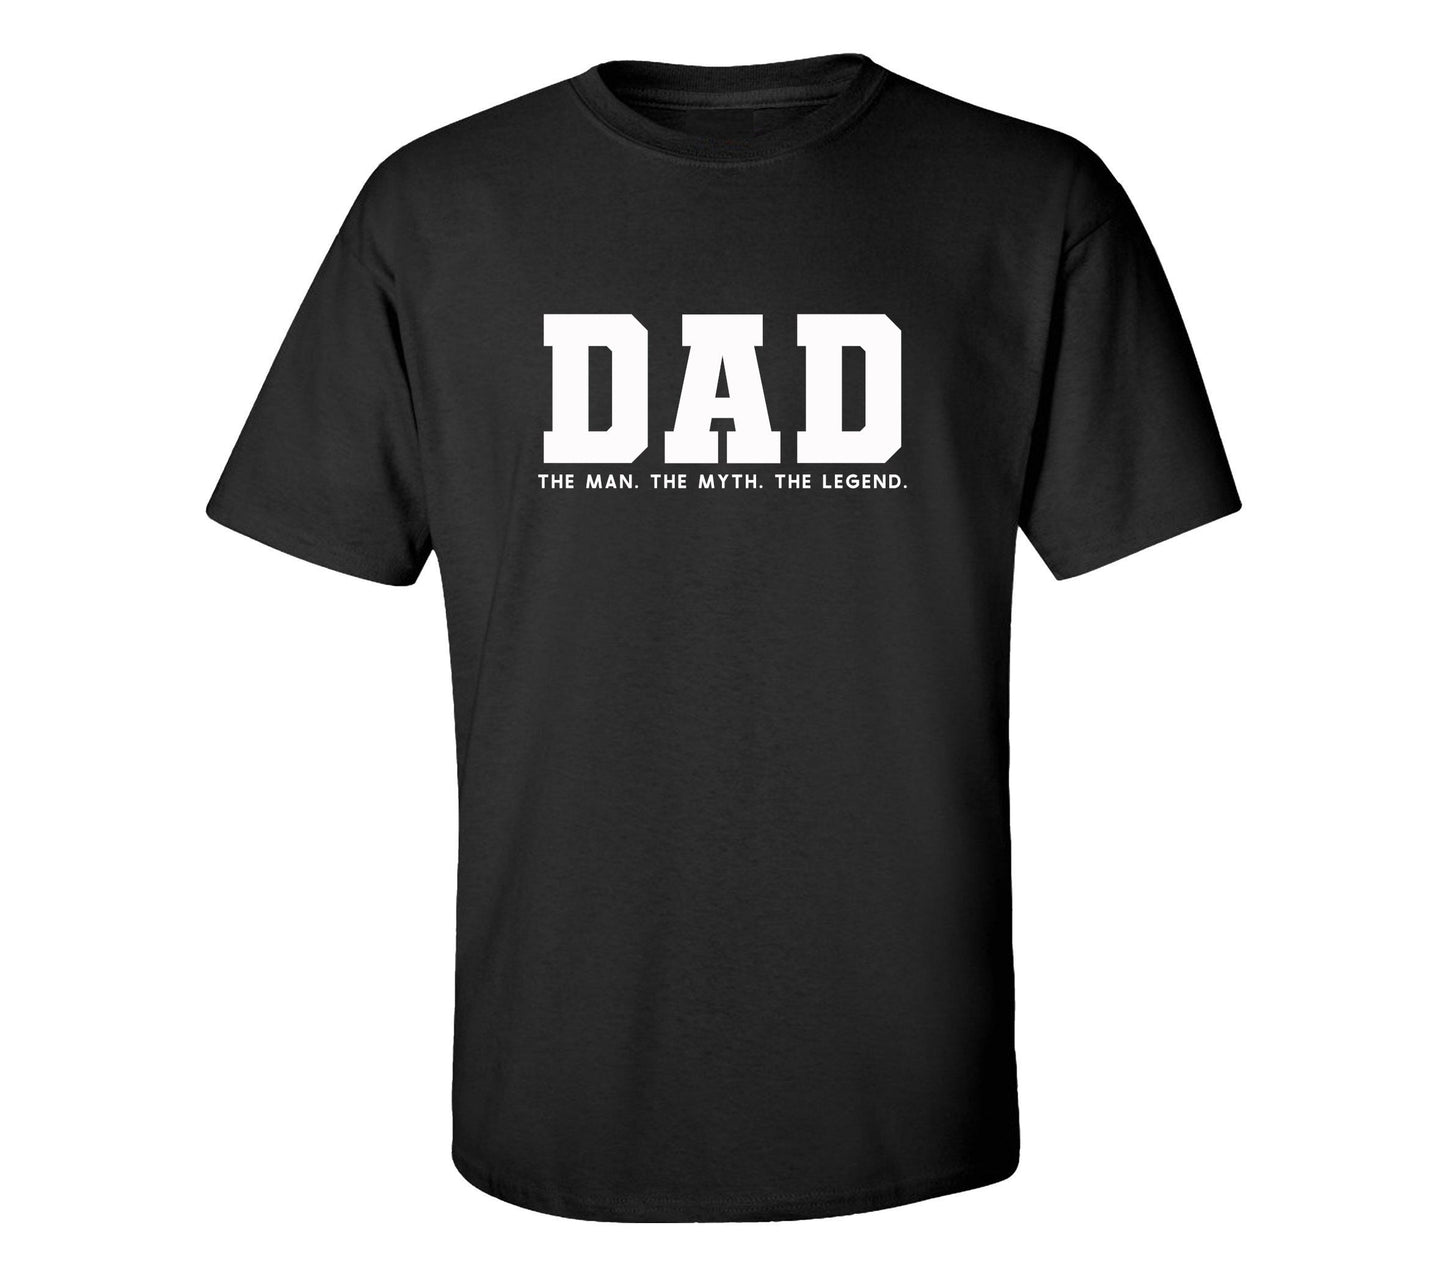 Grandpa Shirt for Grandpa The Man The Myth The Legend Grandpa T Shirt - Fathers Day Gift - Husband Gift Grandpa Gift Funny T shirts Price: